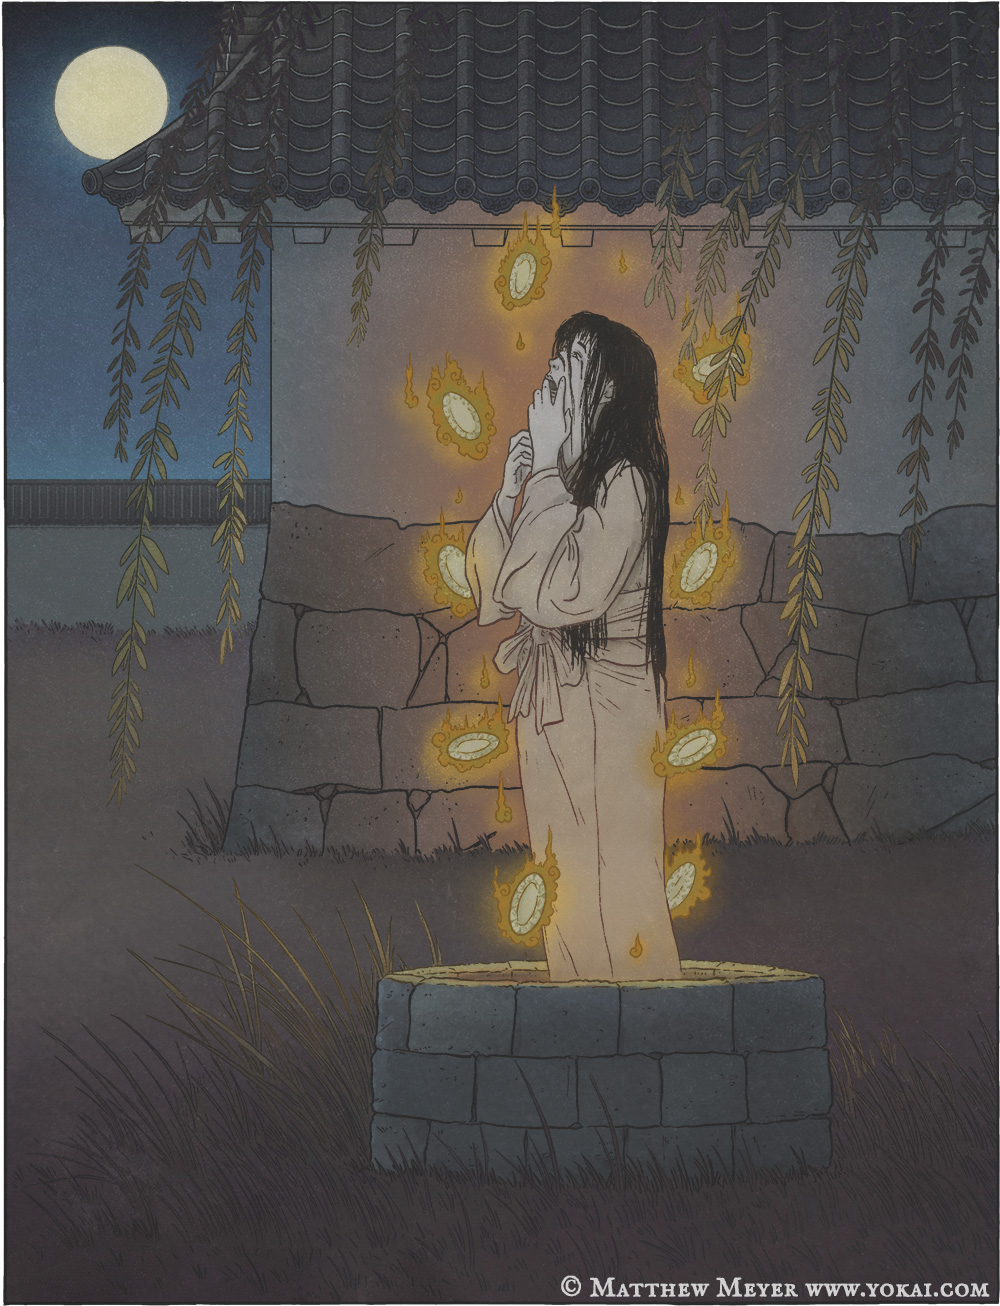 An artistic depiction of the servant Oikiku’s spirit